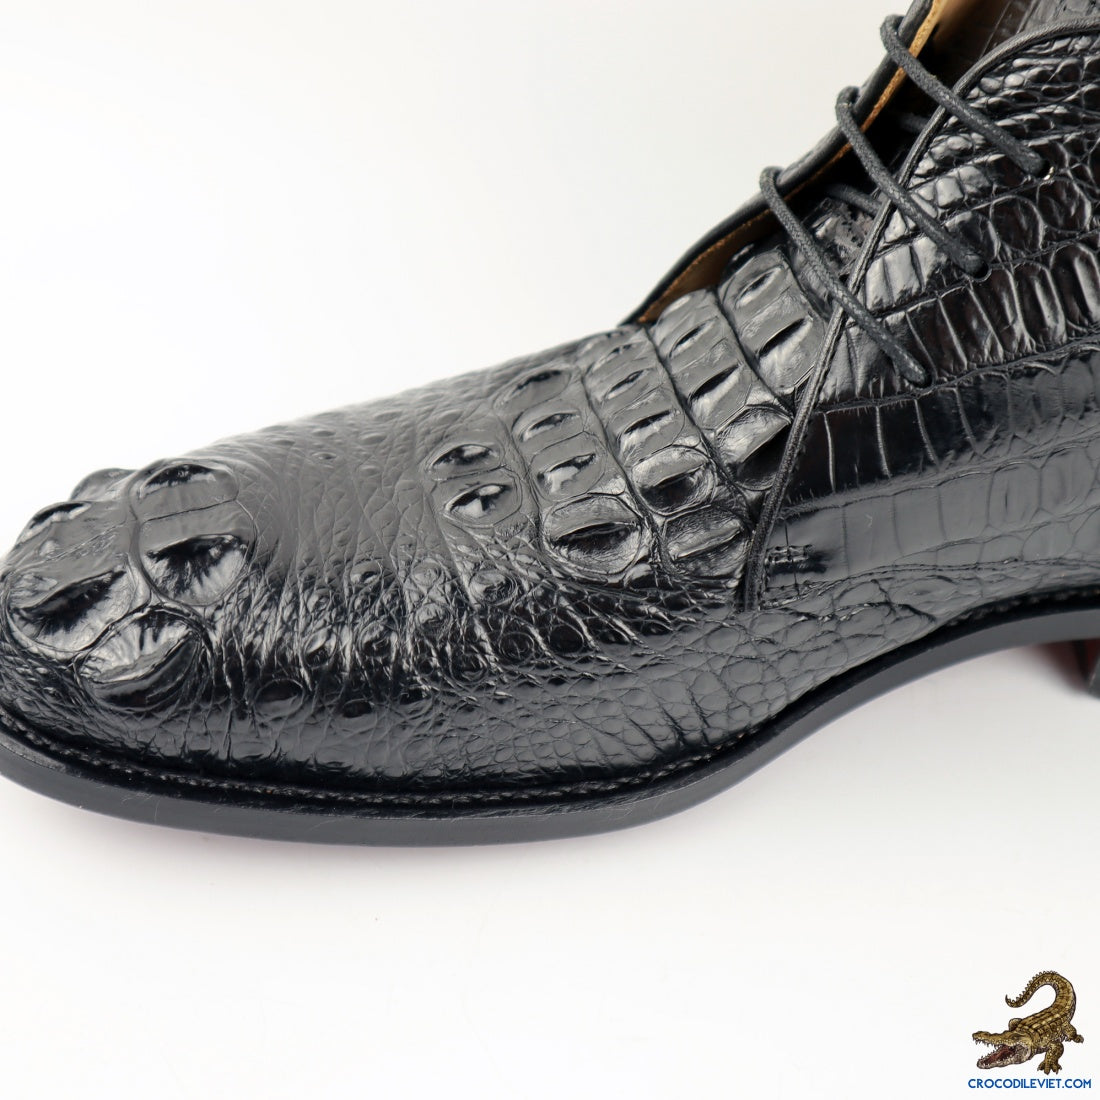 Men’s Handcrafted Alligator Crocodile Leather Boots Black